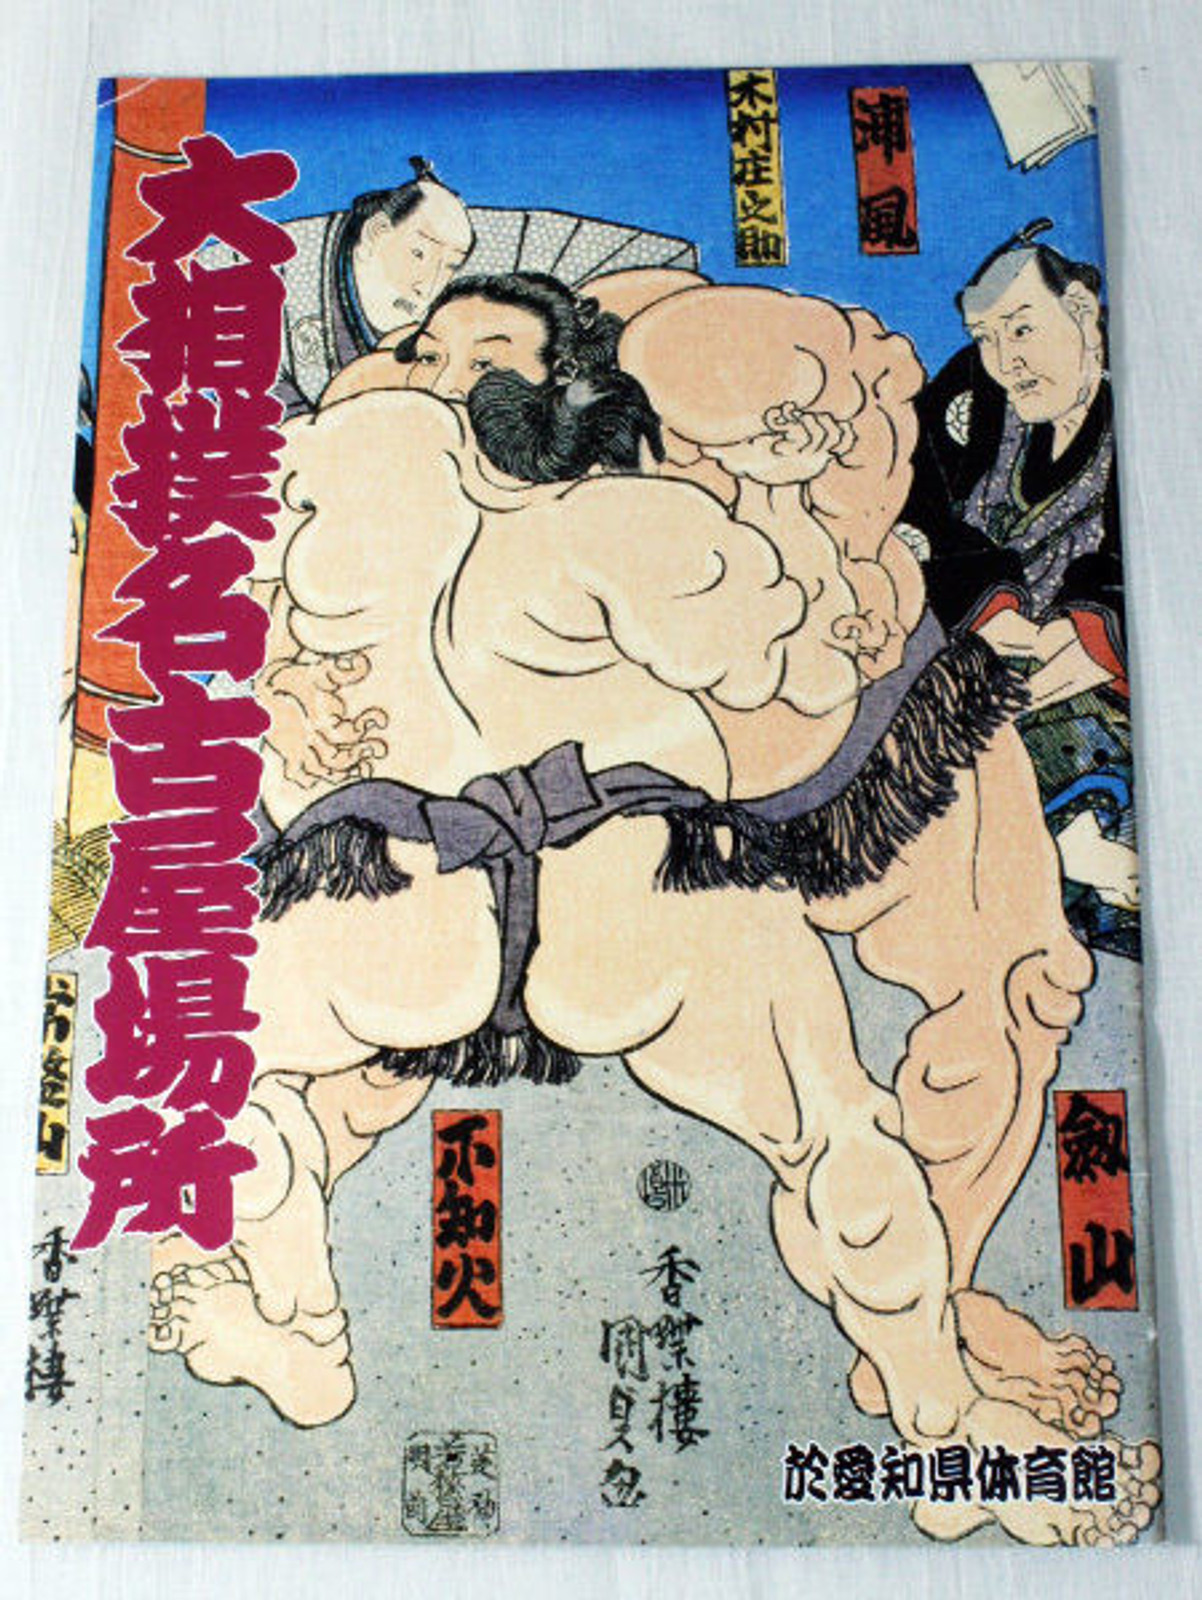 Japanese Sumo Official Program Art Photo Book at Nagoya 07/1995 JAPAN OZUMO